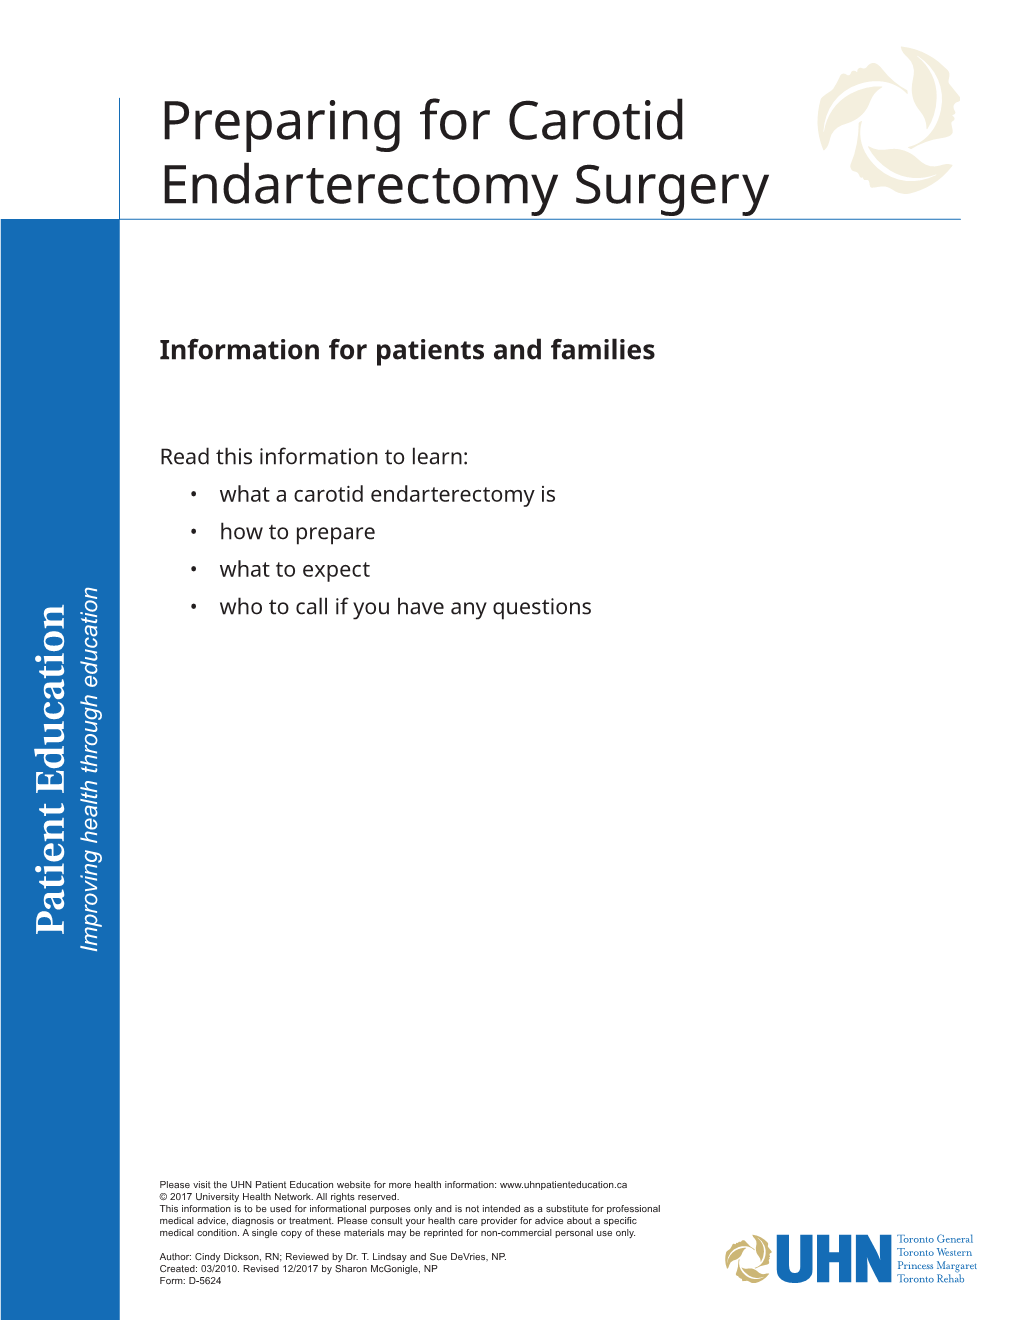 Preparing for Carotid Endarterectomy Surgery